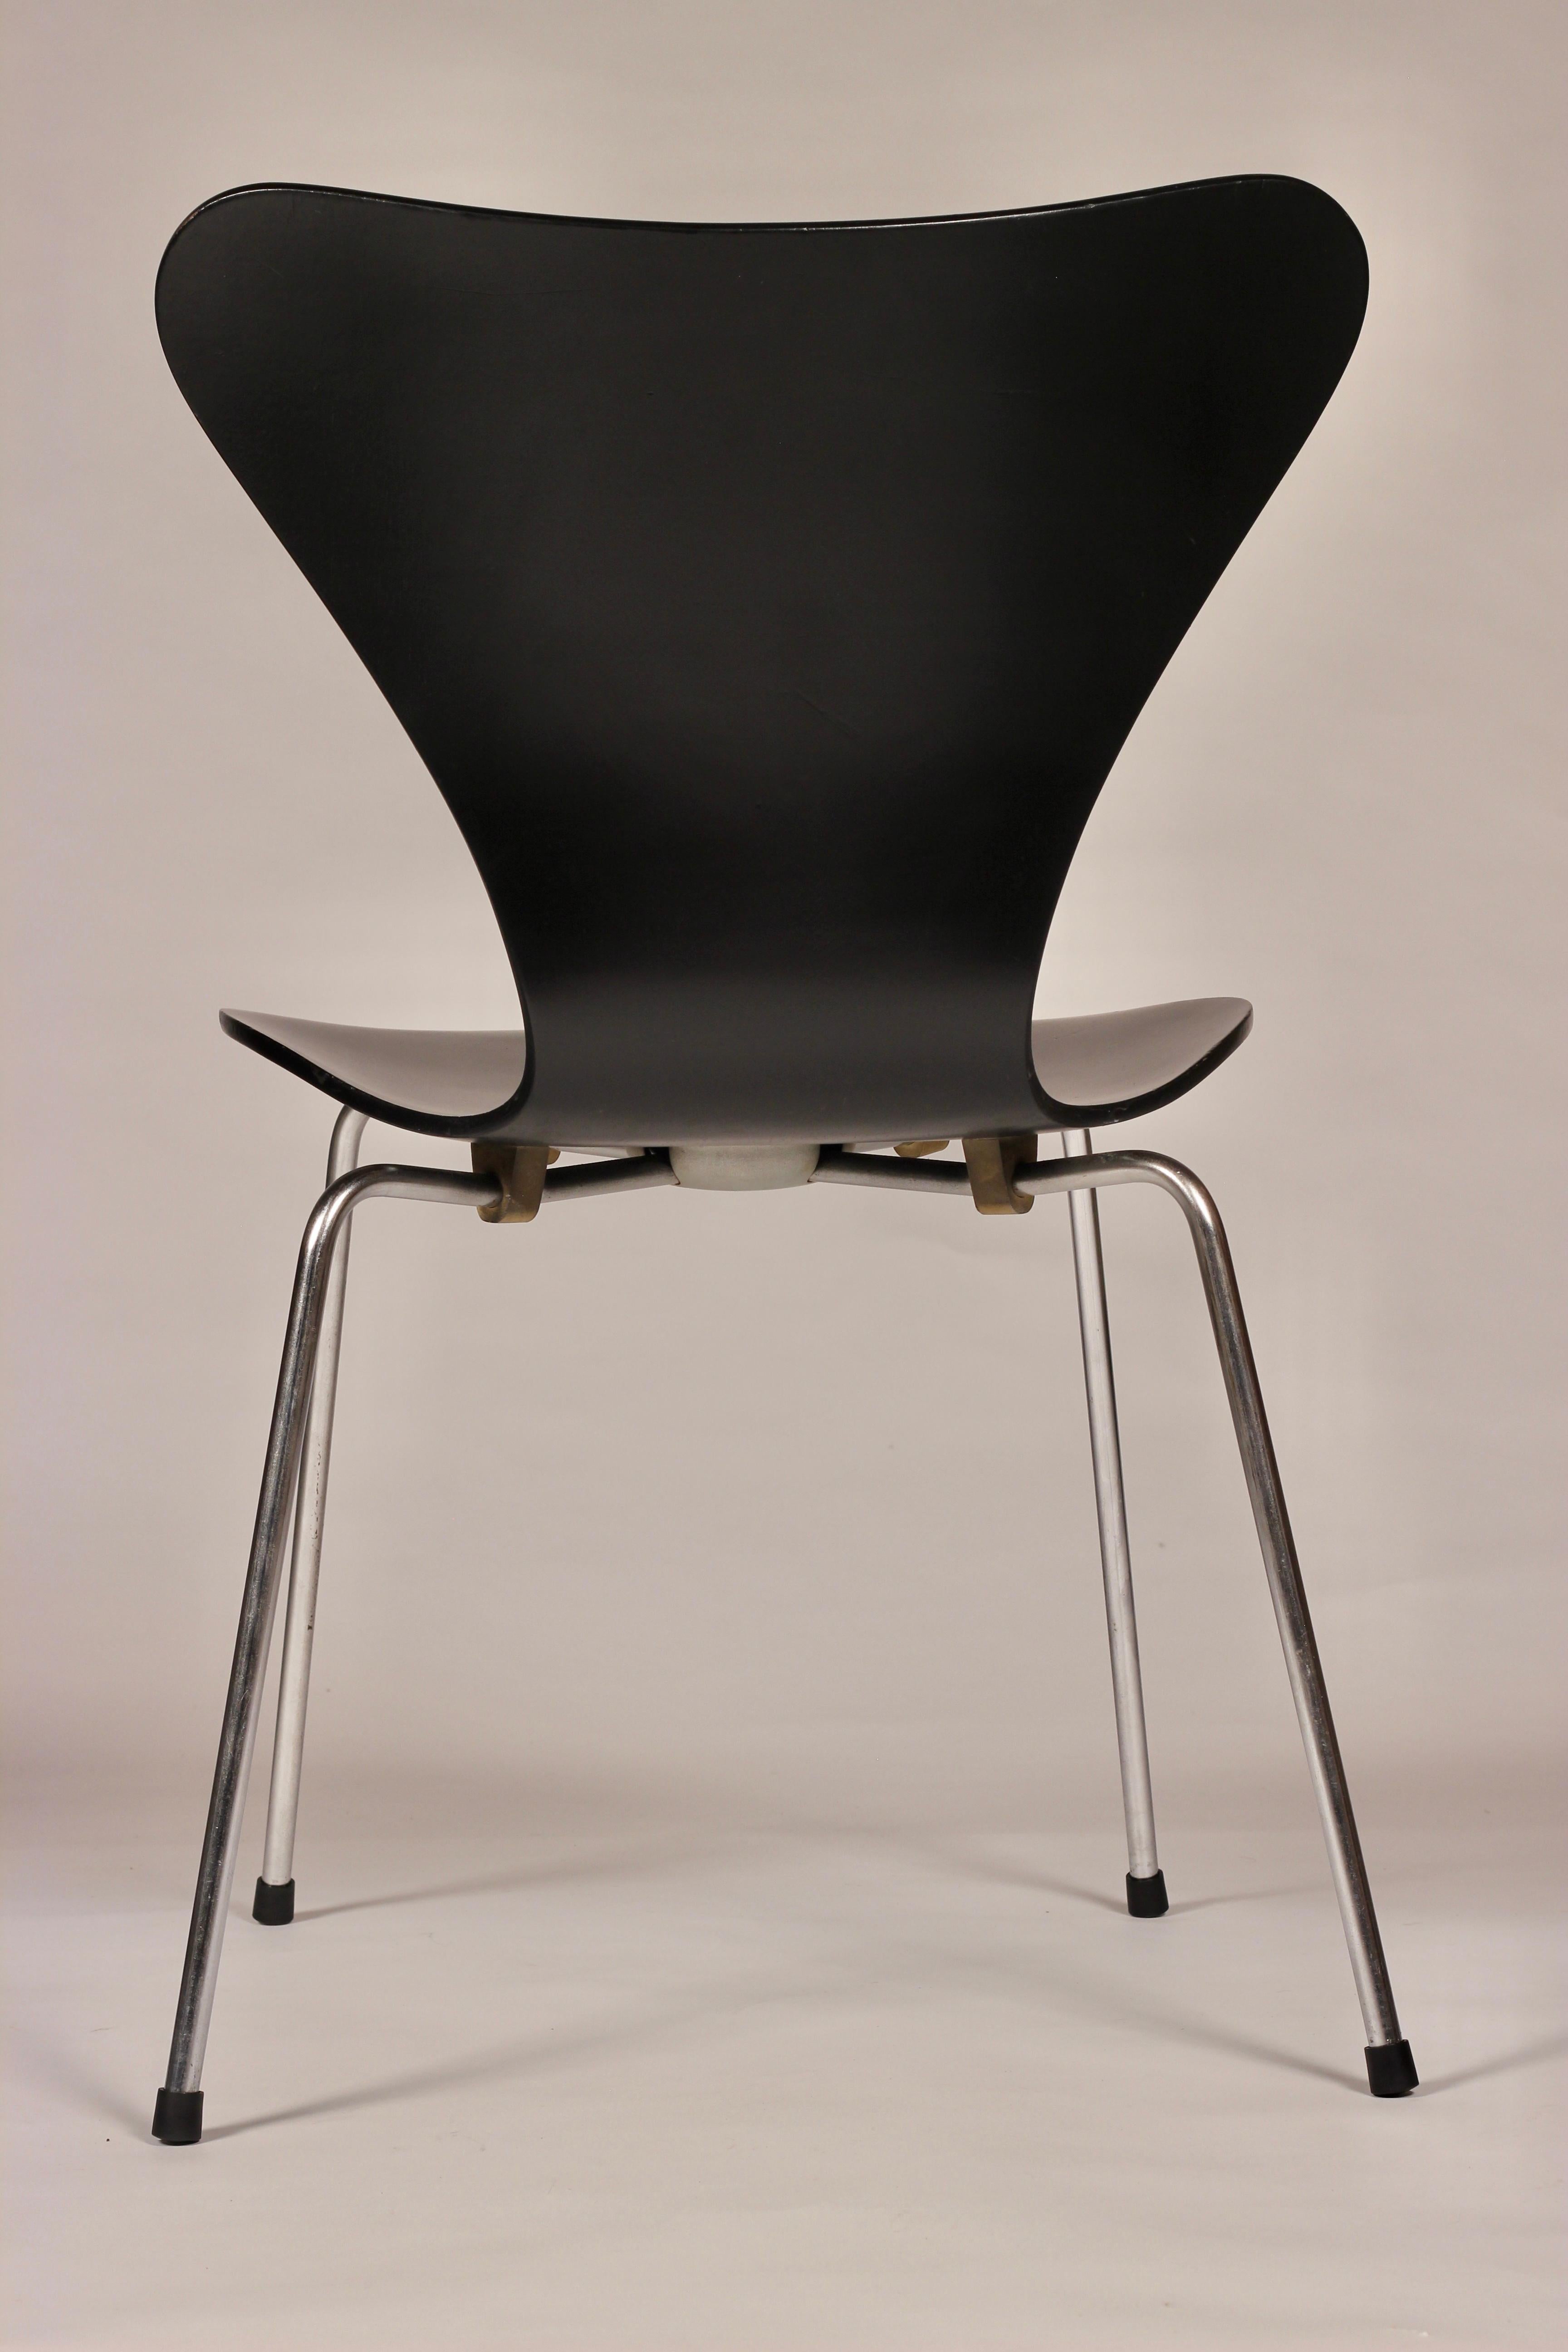 Mid-Century Modern Arne Jacobsen Series 7 or 3107 Chairs by Fritz Hansen Mid Century Modern 1964 For Sale